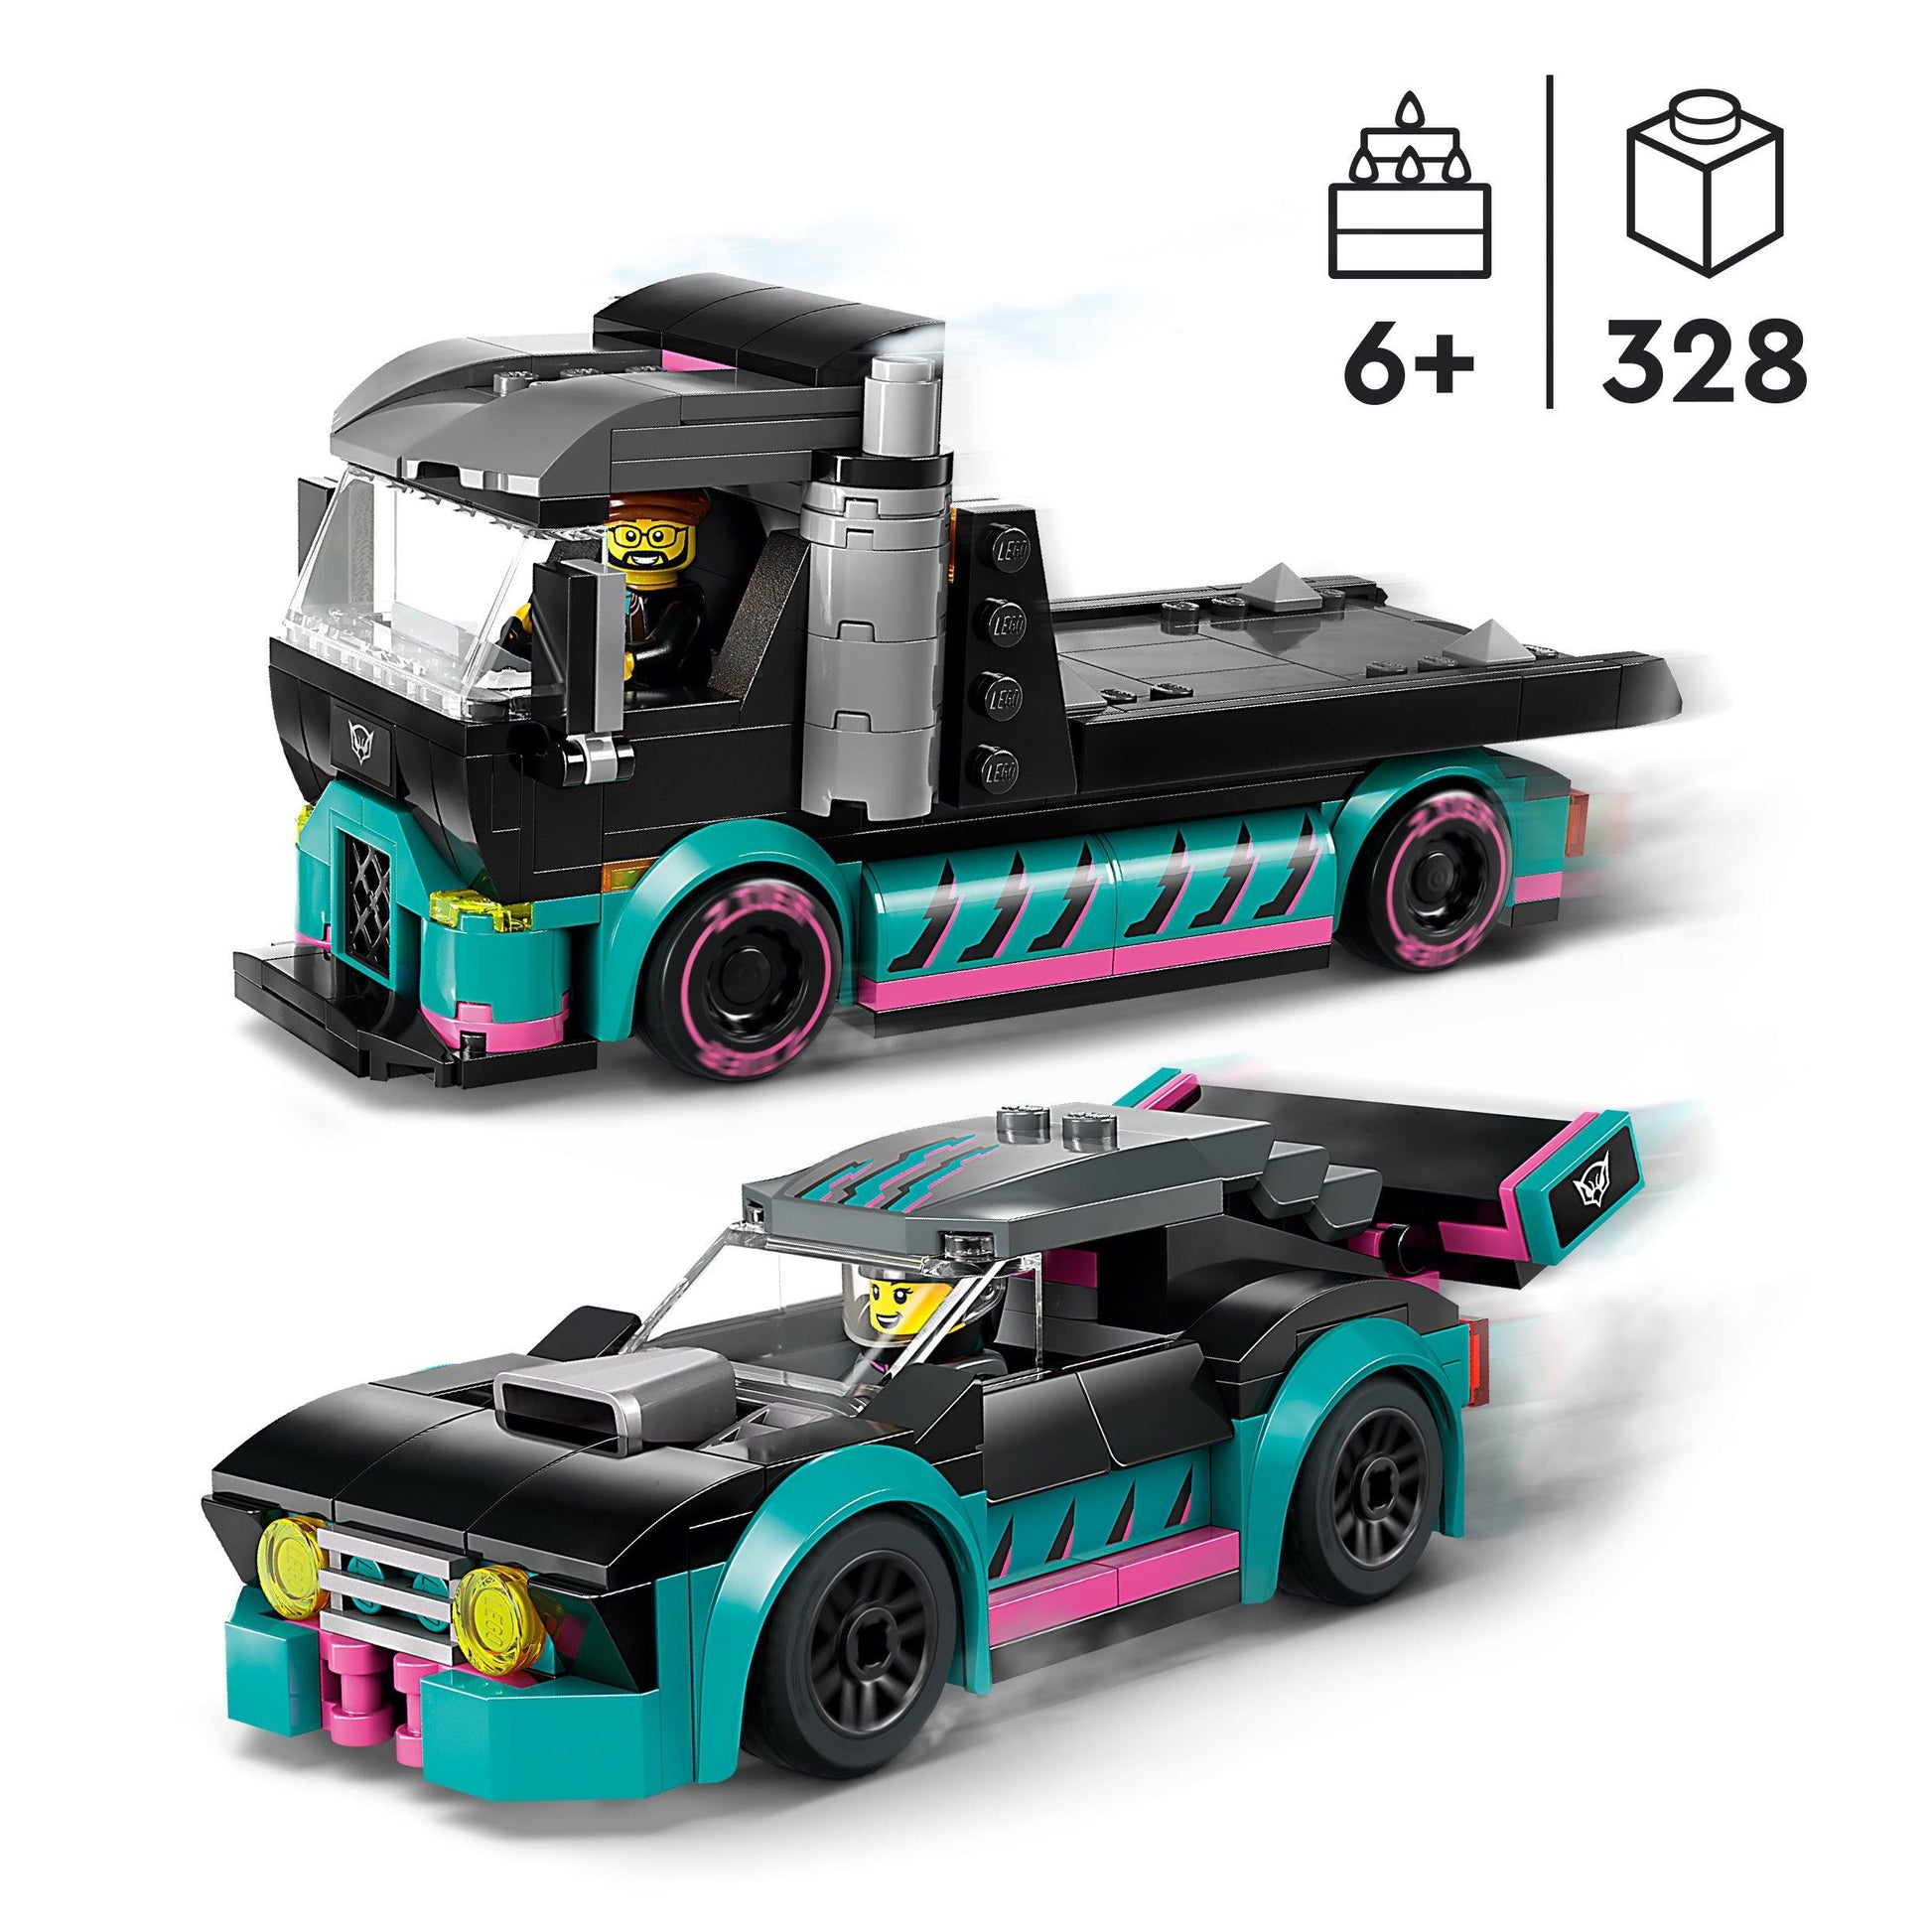 LEGO Raceautotransporter 60406 City LEGO CITY @ 2TTOYS LEGO €. 17.99